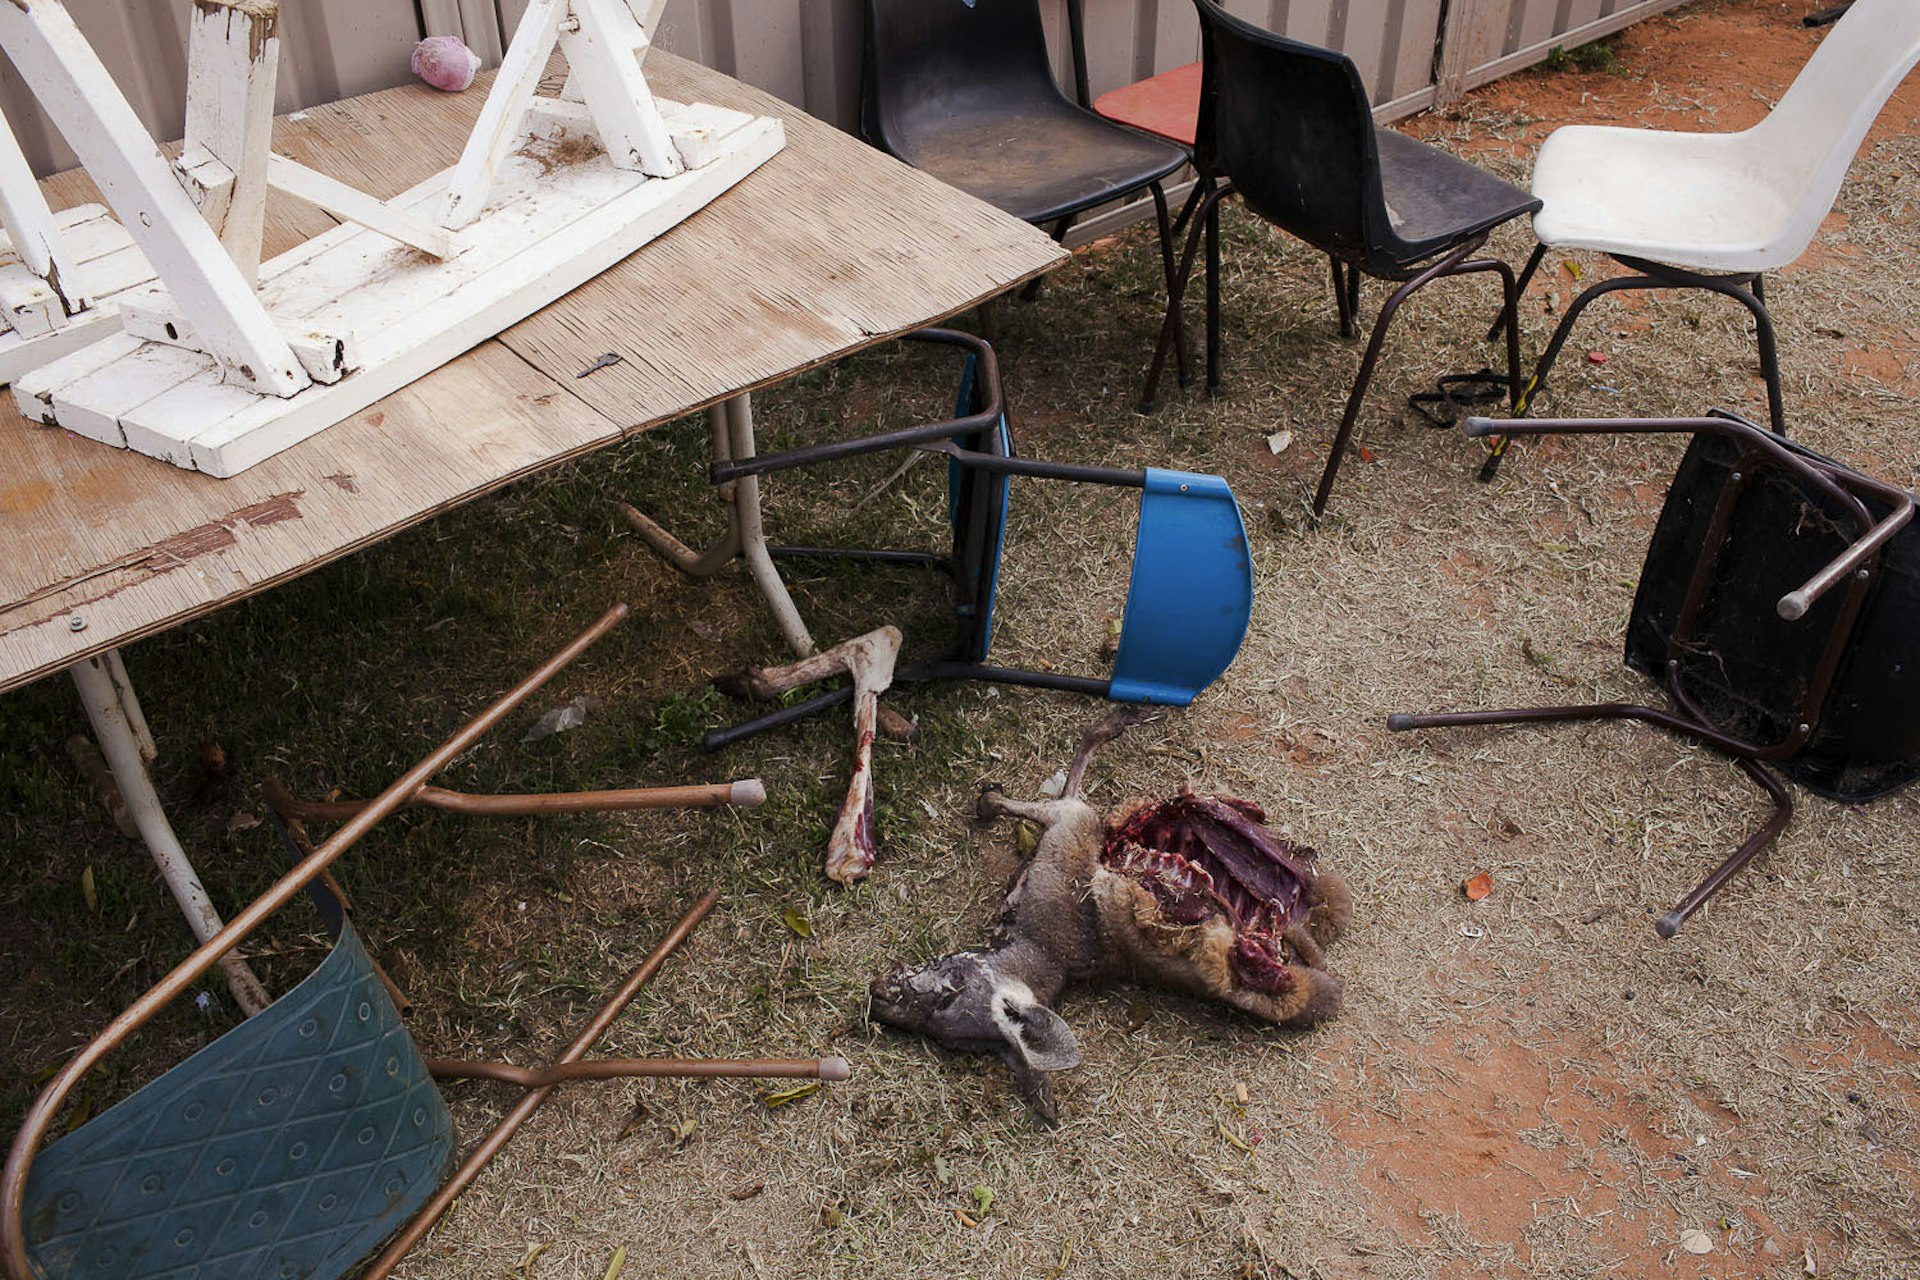 A discarded kangaroo torso left for the dogs. David Maurice Smith/Oculi.